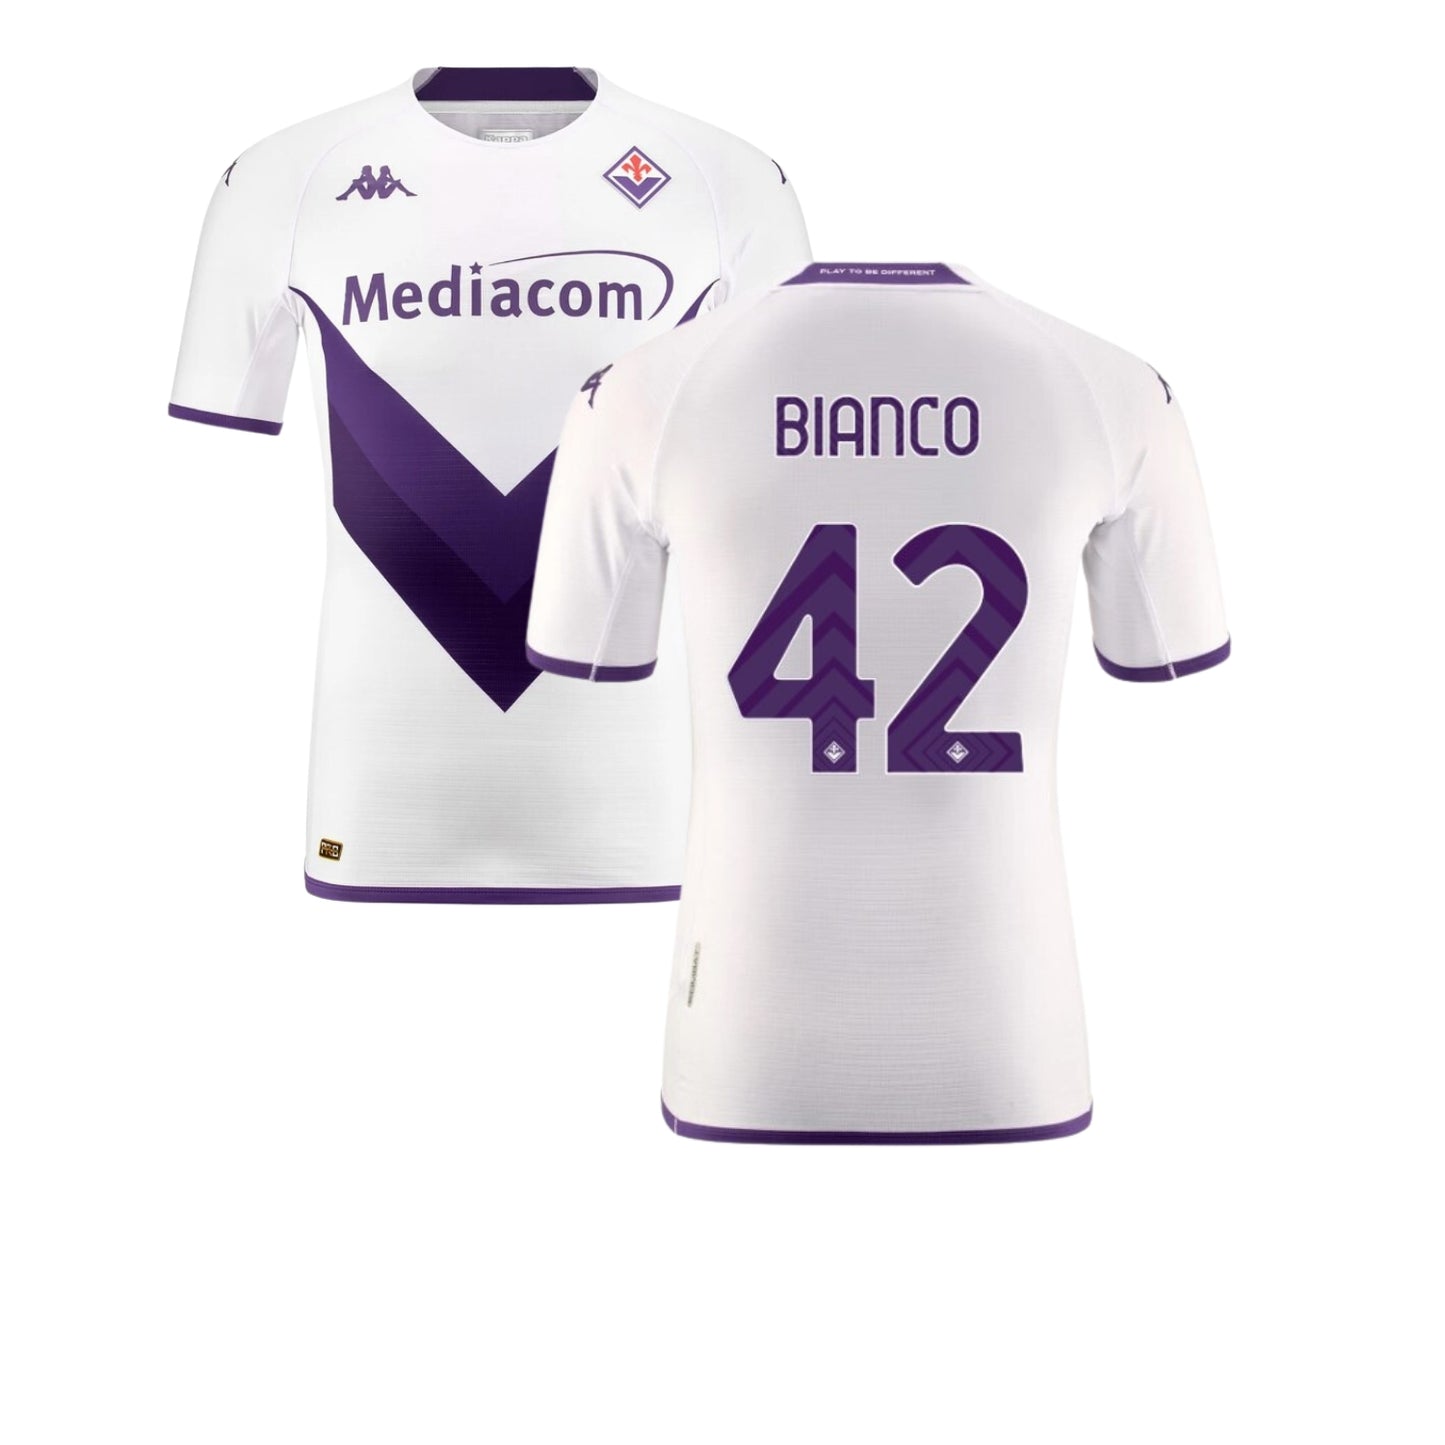 Alessandro Bianco ACF Fiorentina 42 Jersey